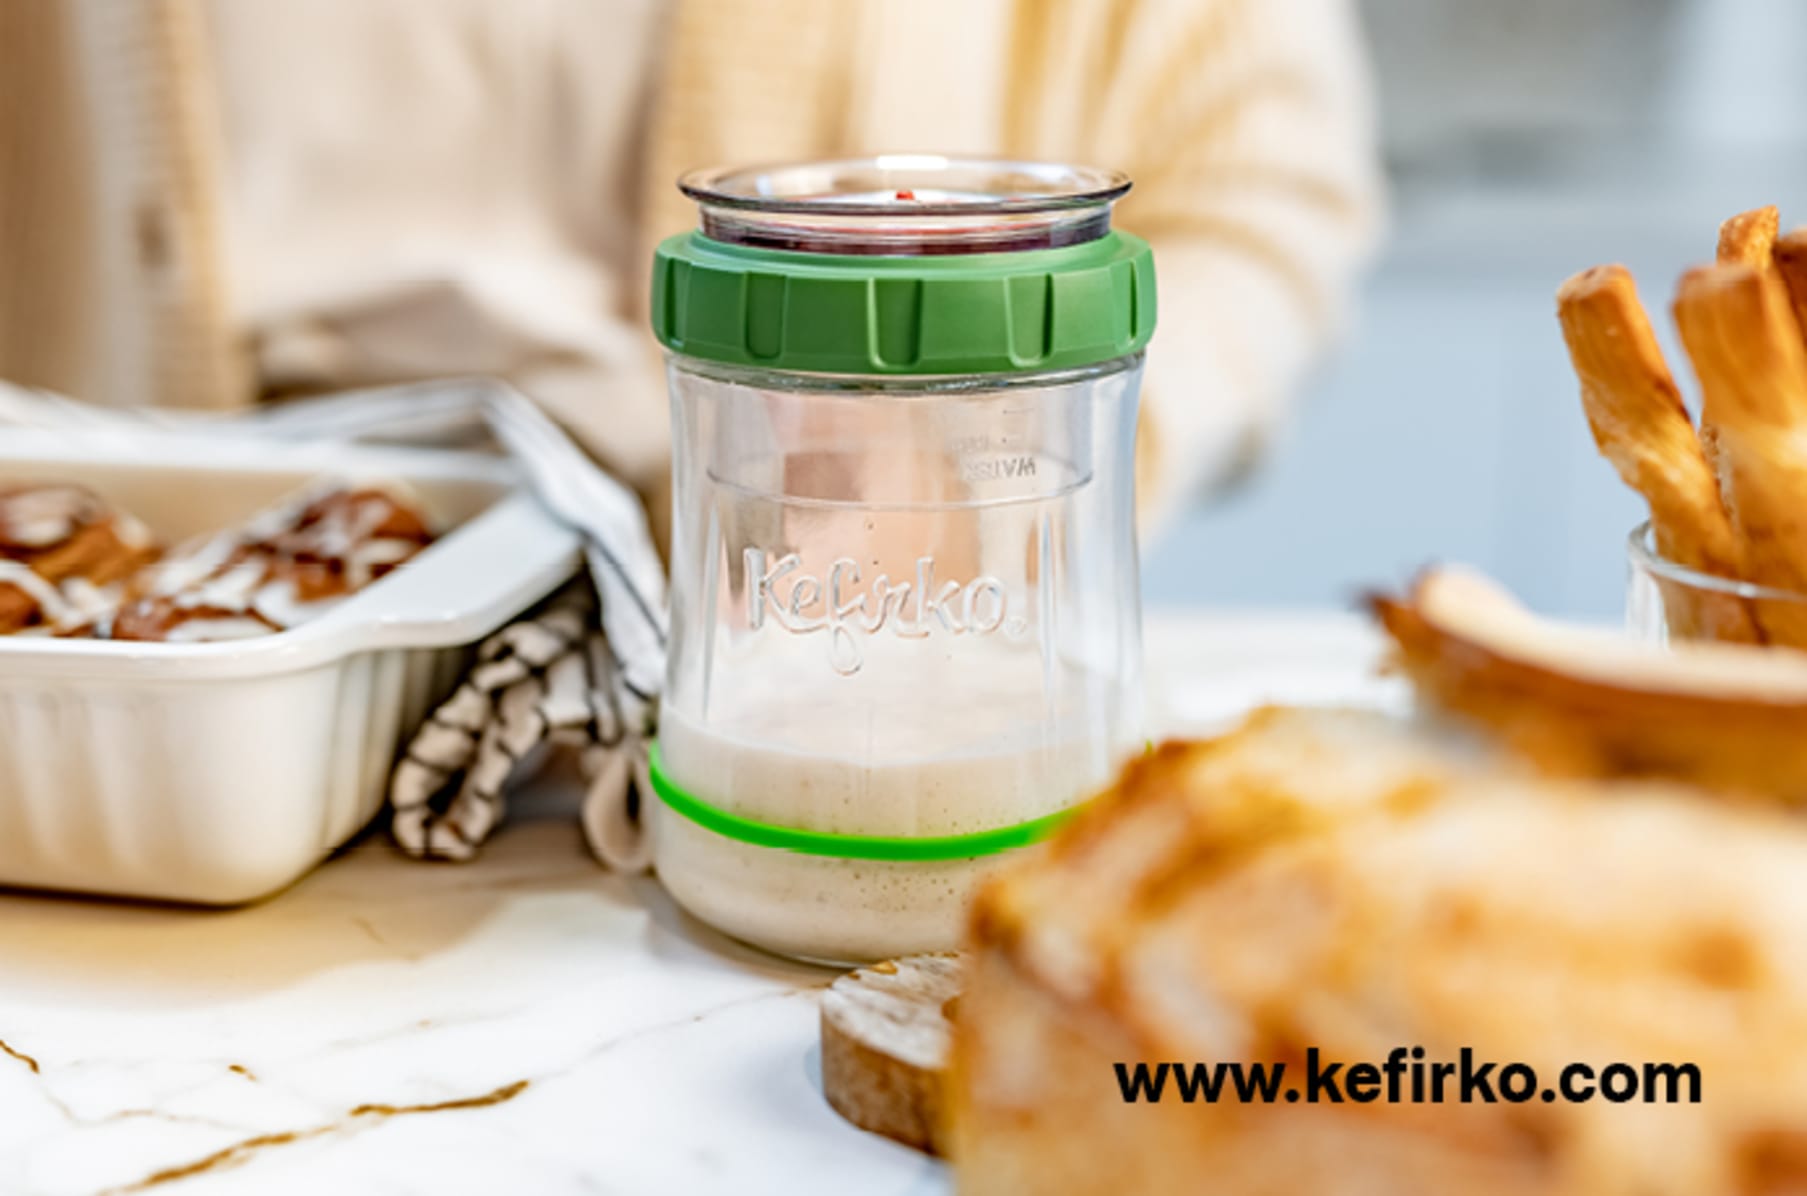 Kefirko - Veggie Fermenter (All-in-One Fermentation Jars) –